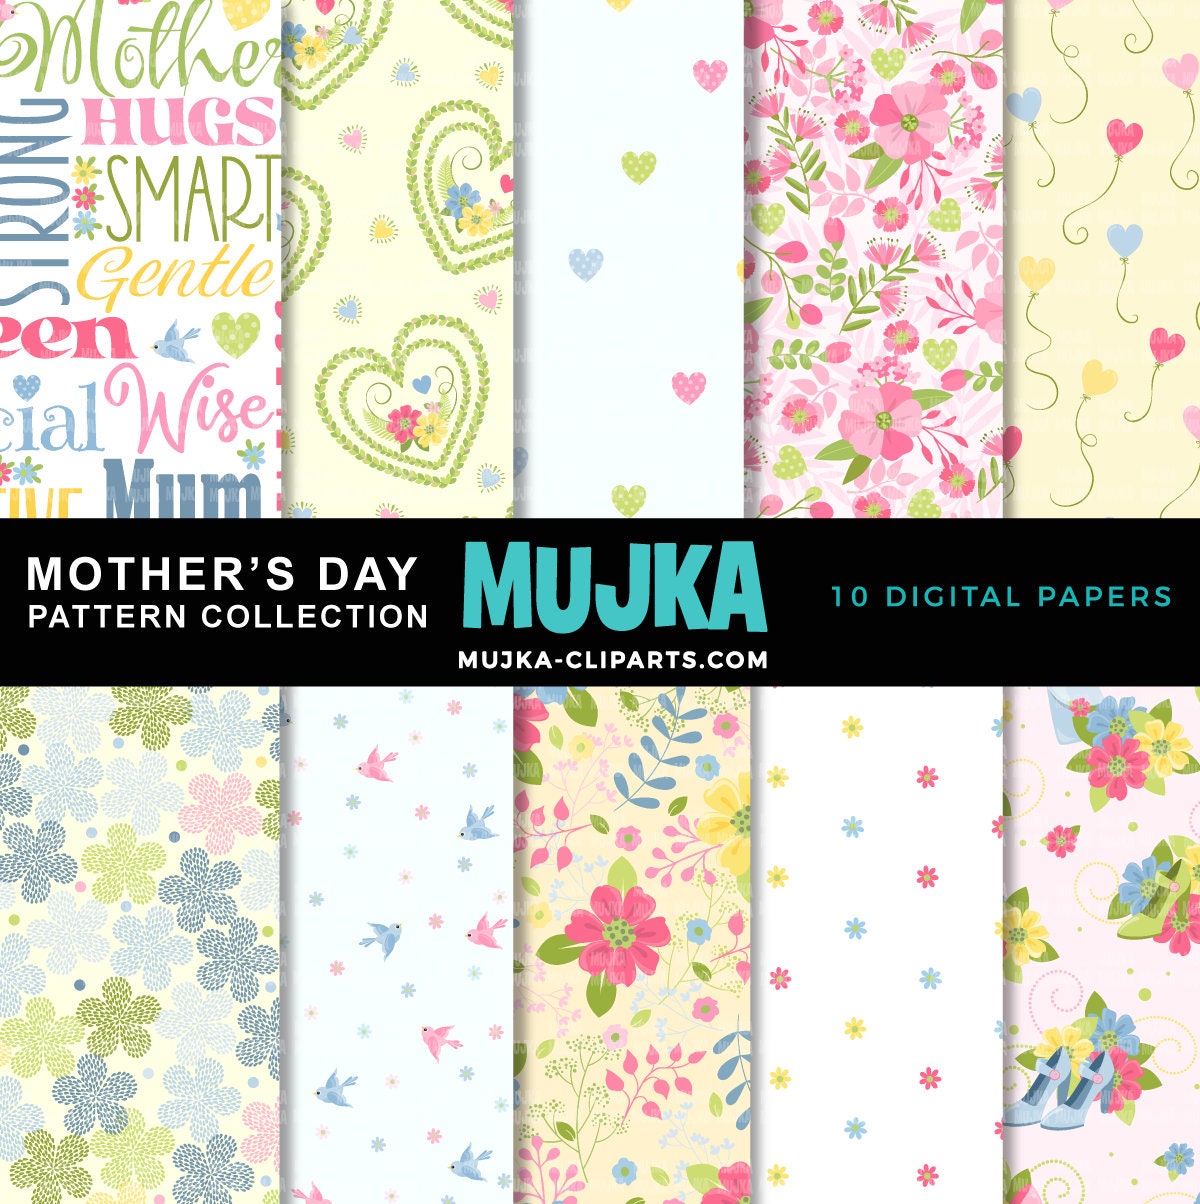 Papéis digitais para mães, papéis digitais para o dia das mães, padrões sem costura, papéis digitais de primavera, primavera png, fundo de flores, papéis de scrapbook